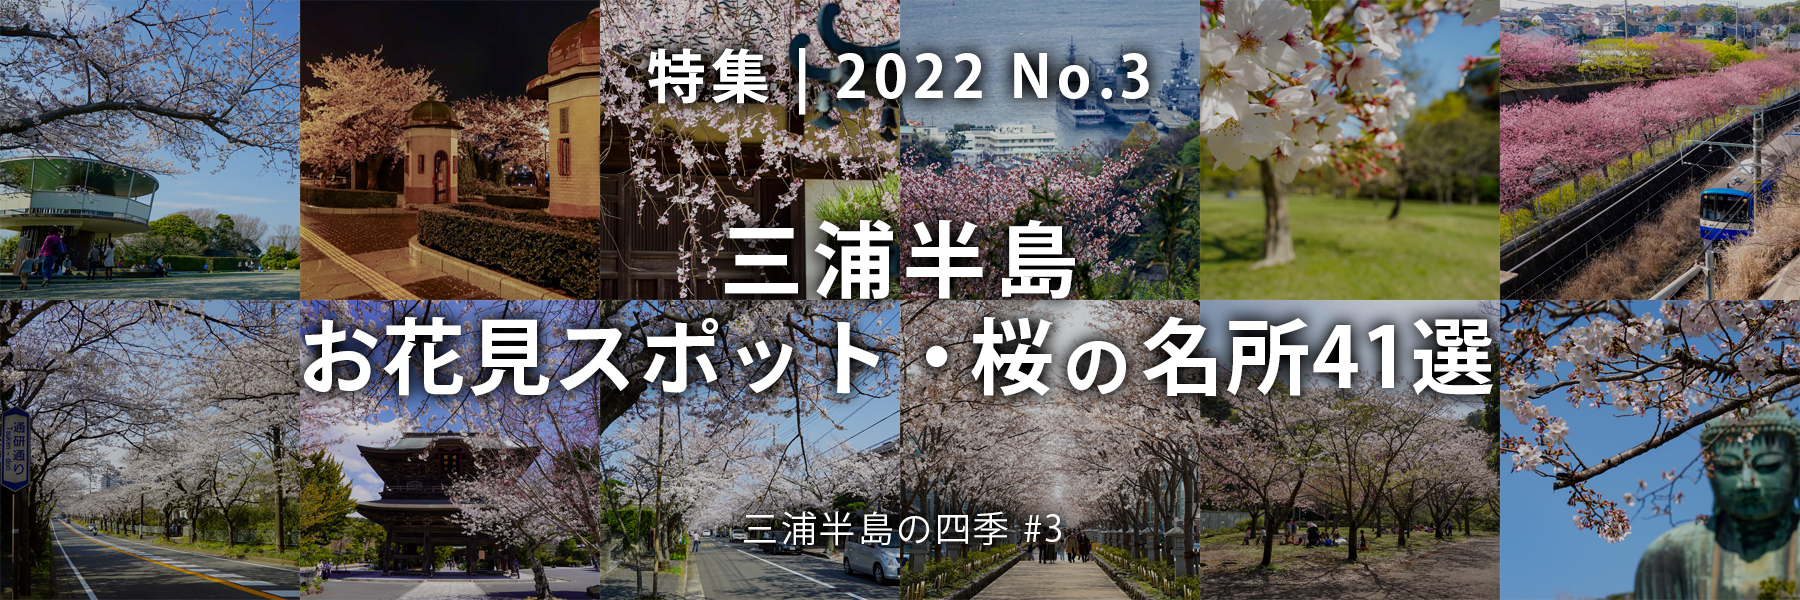 【2022 No.3】特集 | 三浦半島お花見スポット・桜の名所41選